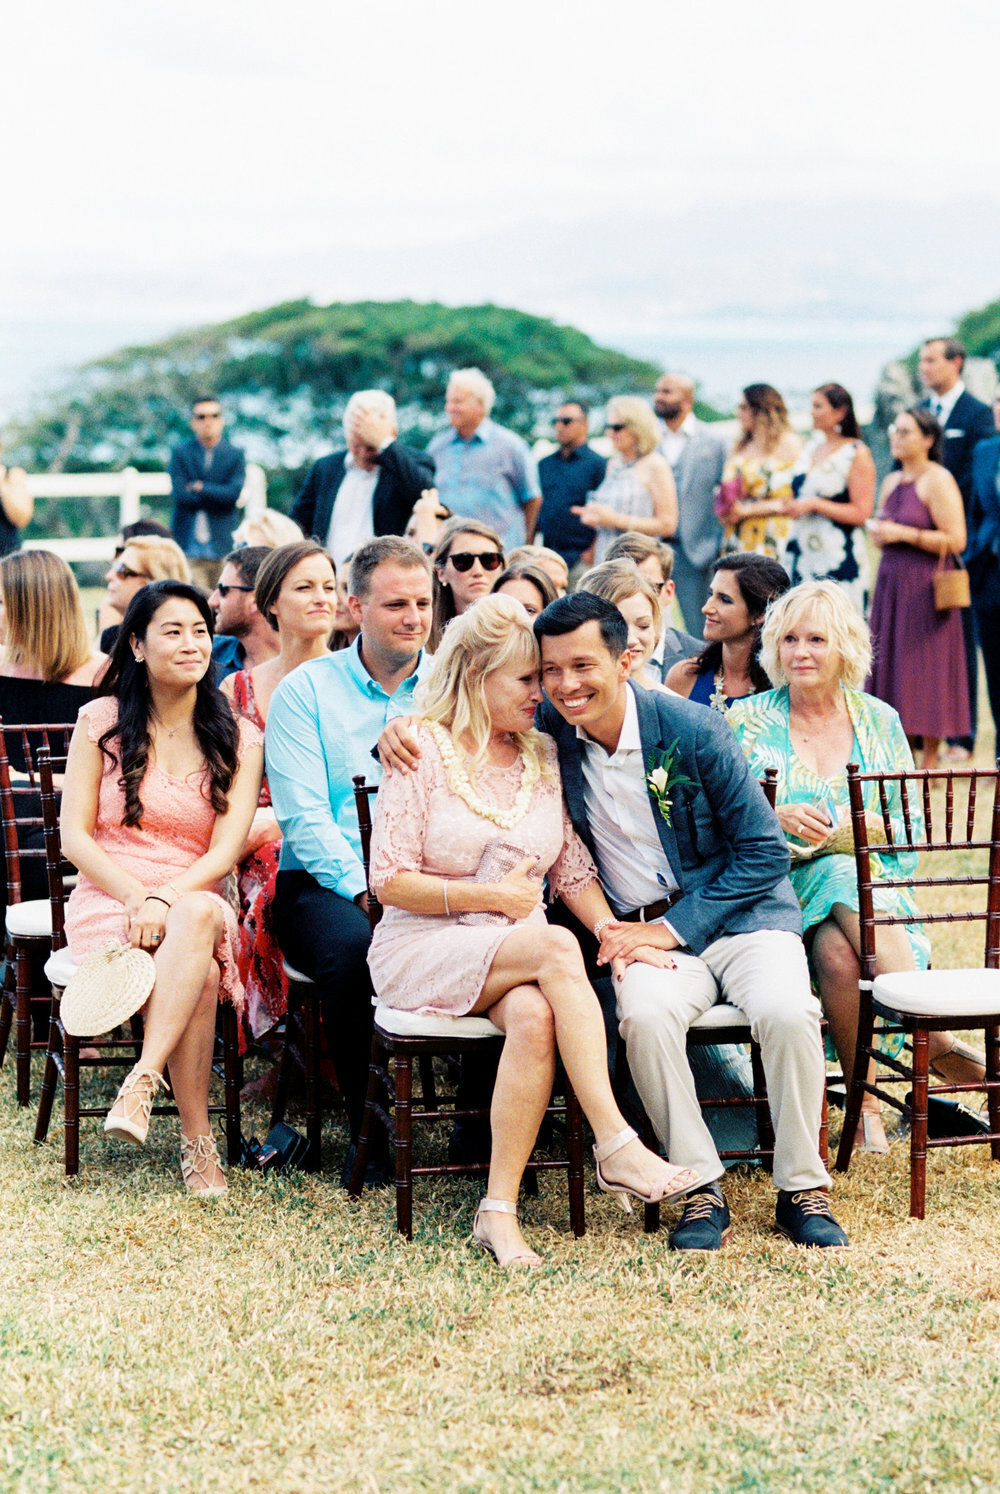 Britni + Andrew | Hawaii Wedding & Lifestyle Photography | Ashley Goodwin Photography